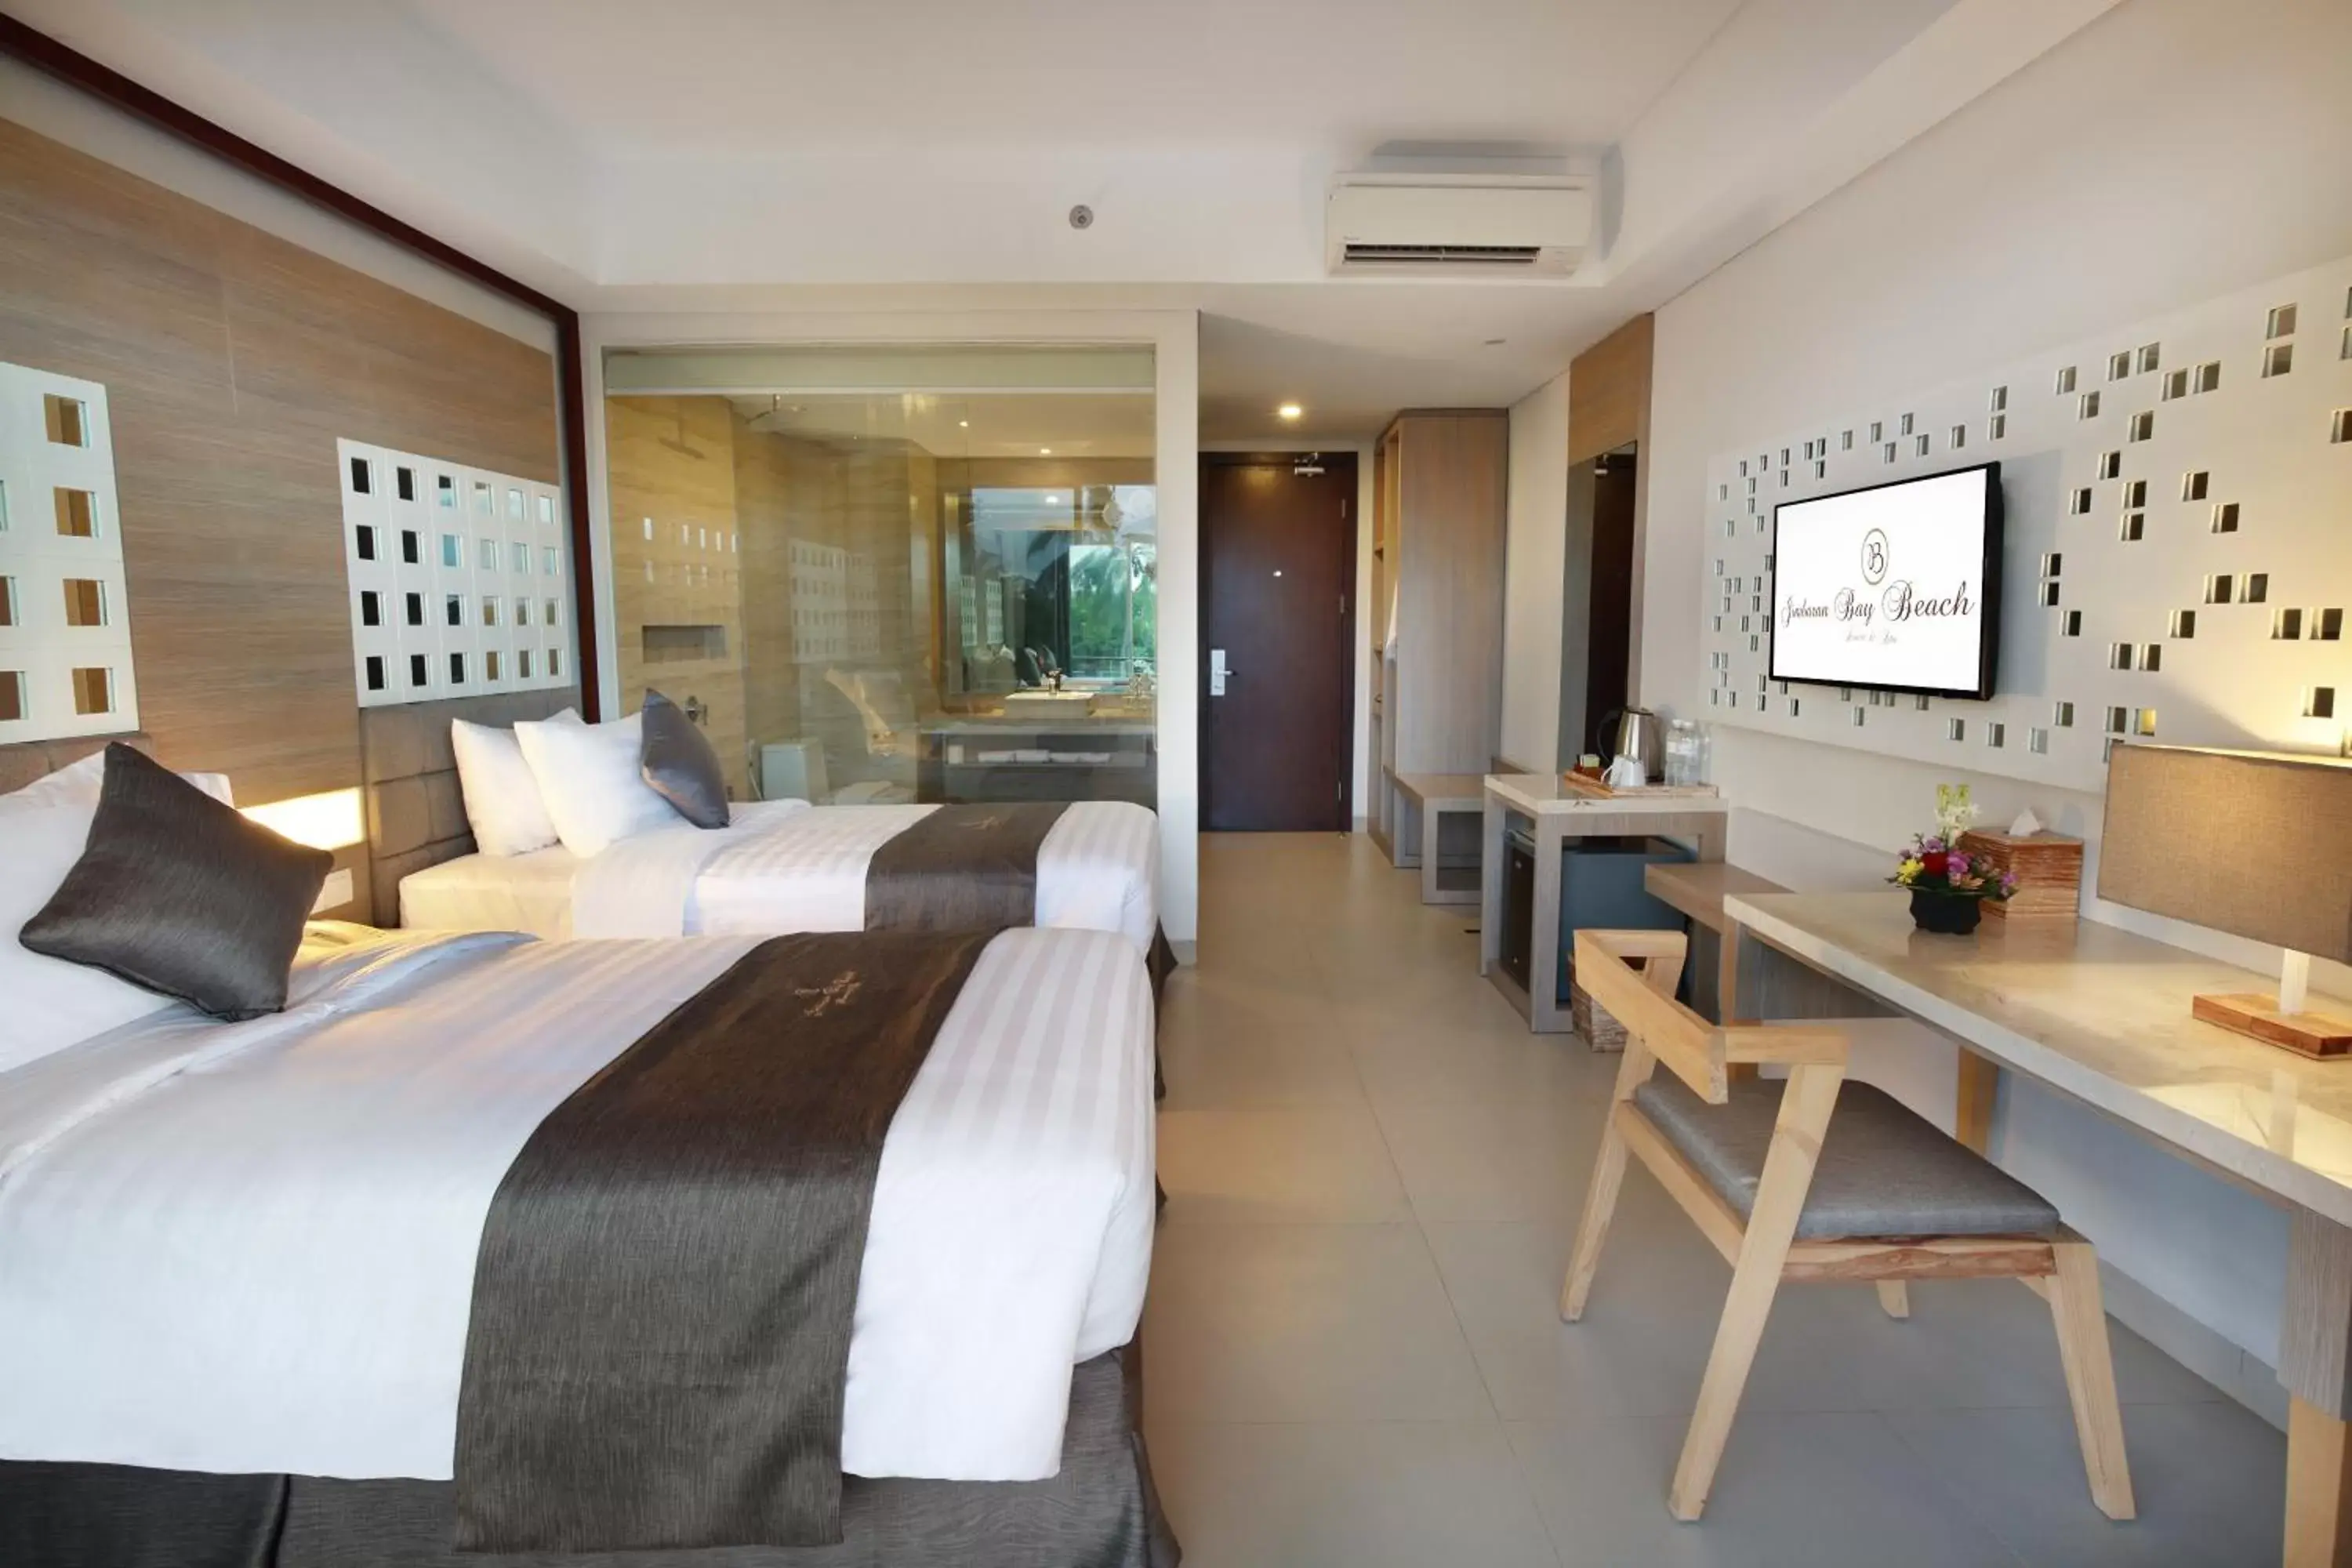 Trunajaya Deluxe Double or Twin Room in Jimbaran Bay Beach Resort and Spa by Prabhu